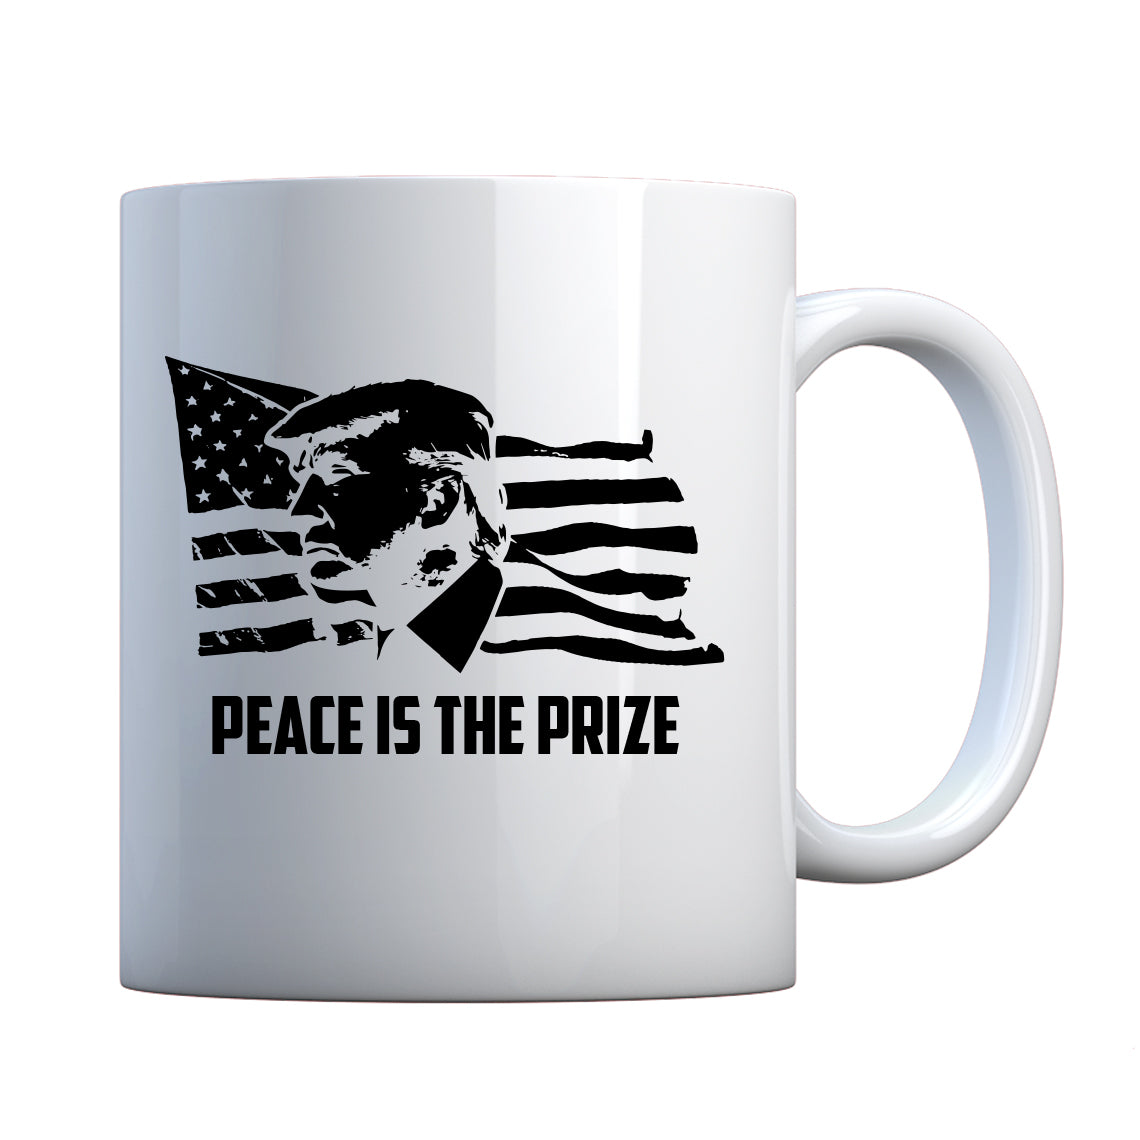 Mug Peace is the Prize Ceramic Gift Mug